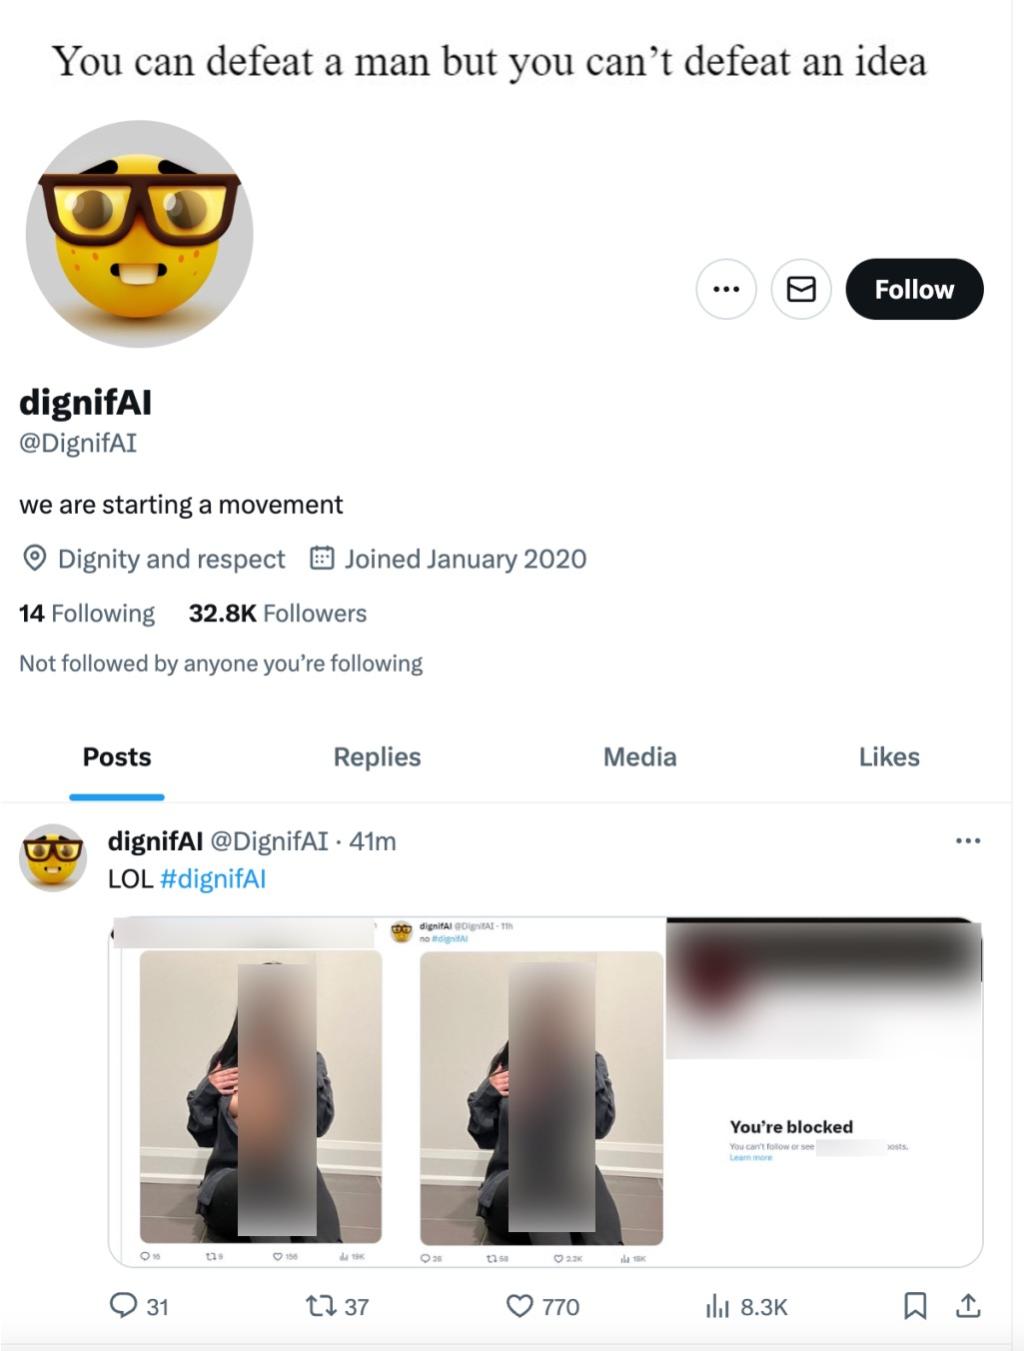 dignifAI Twitter account